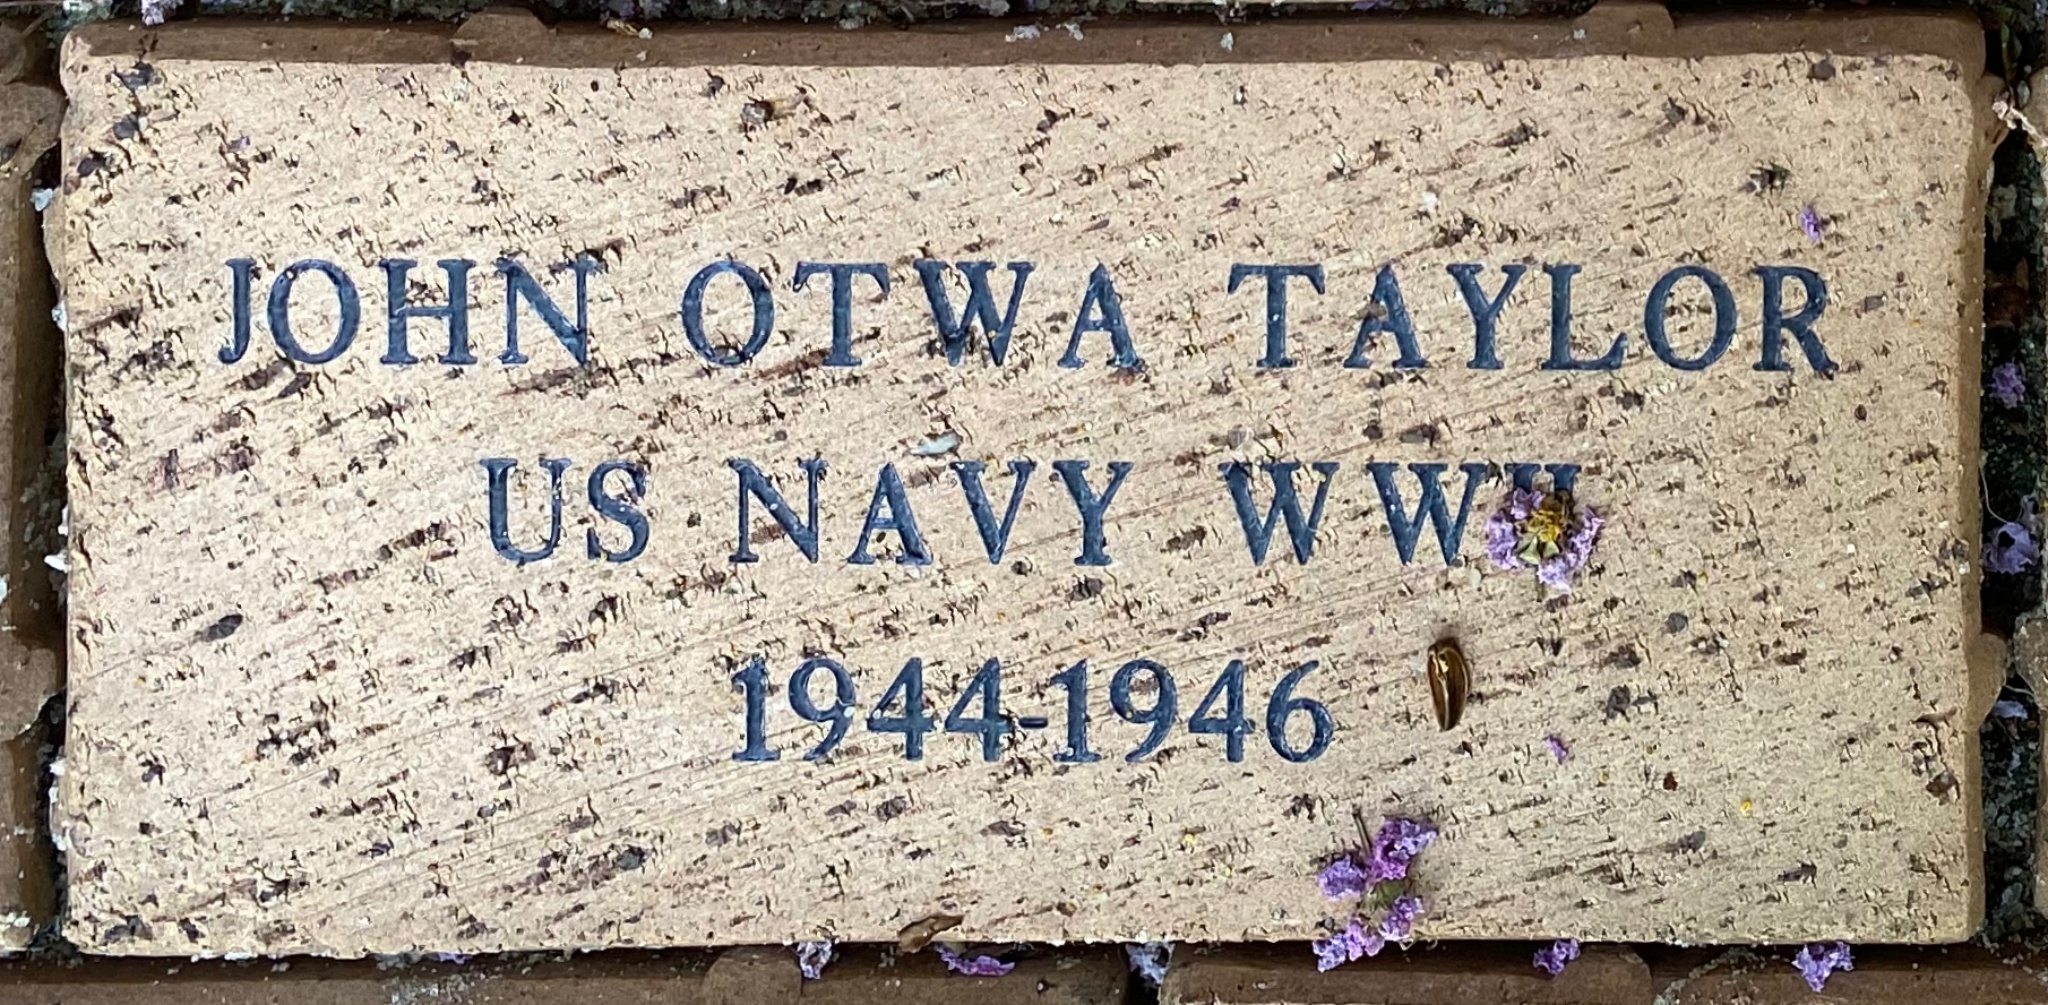 JOHN OTWA TAYLOR US NAVY WWII 1944-1946